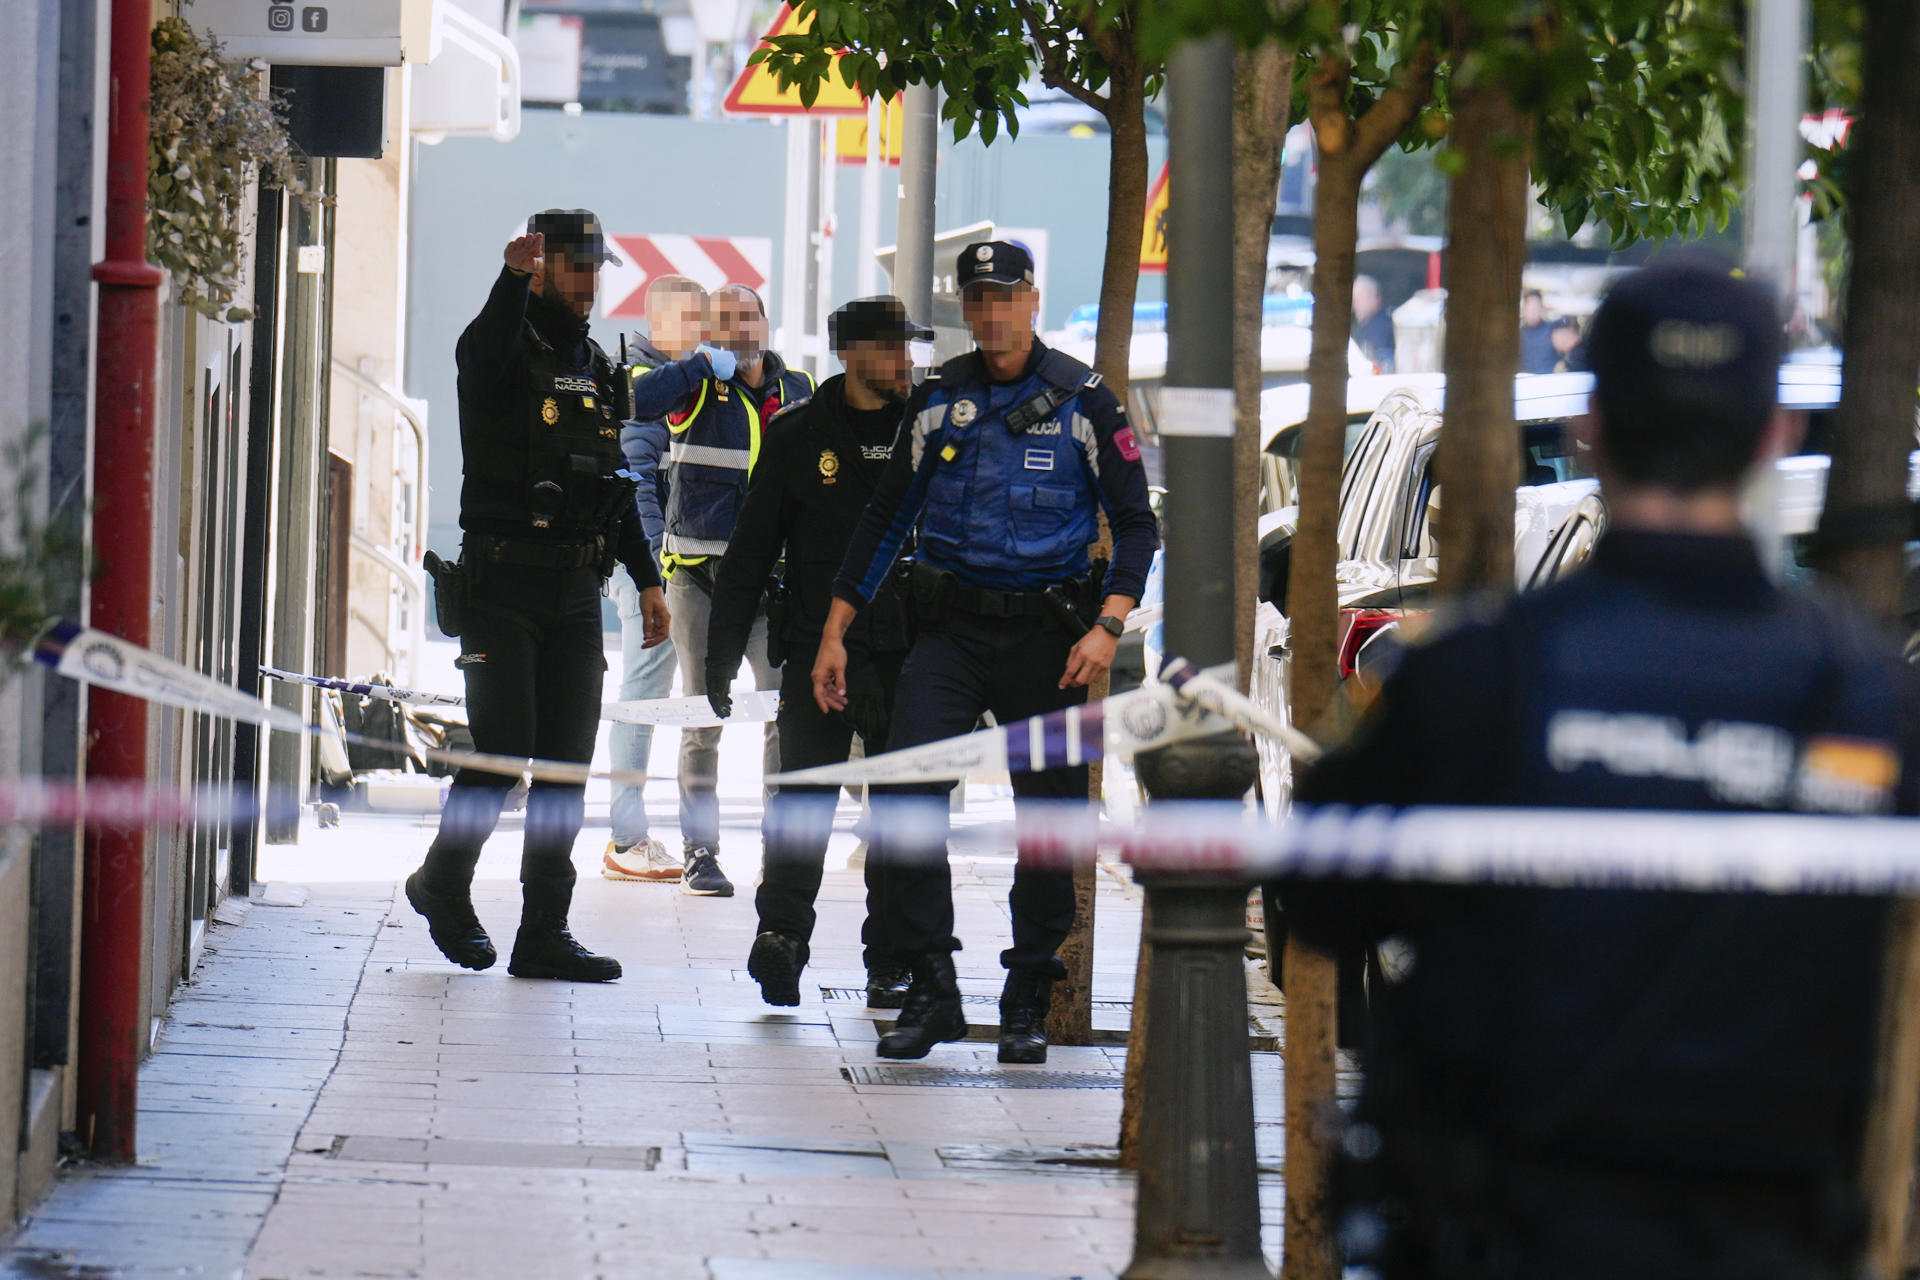 Ex-PP politician Alejo Vidal-Quadras, shot in Madrid street, relates attack to his Iran links